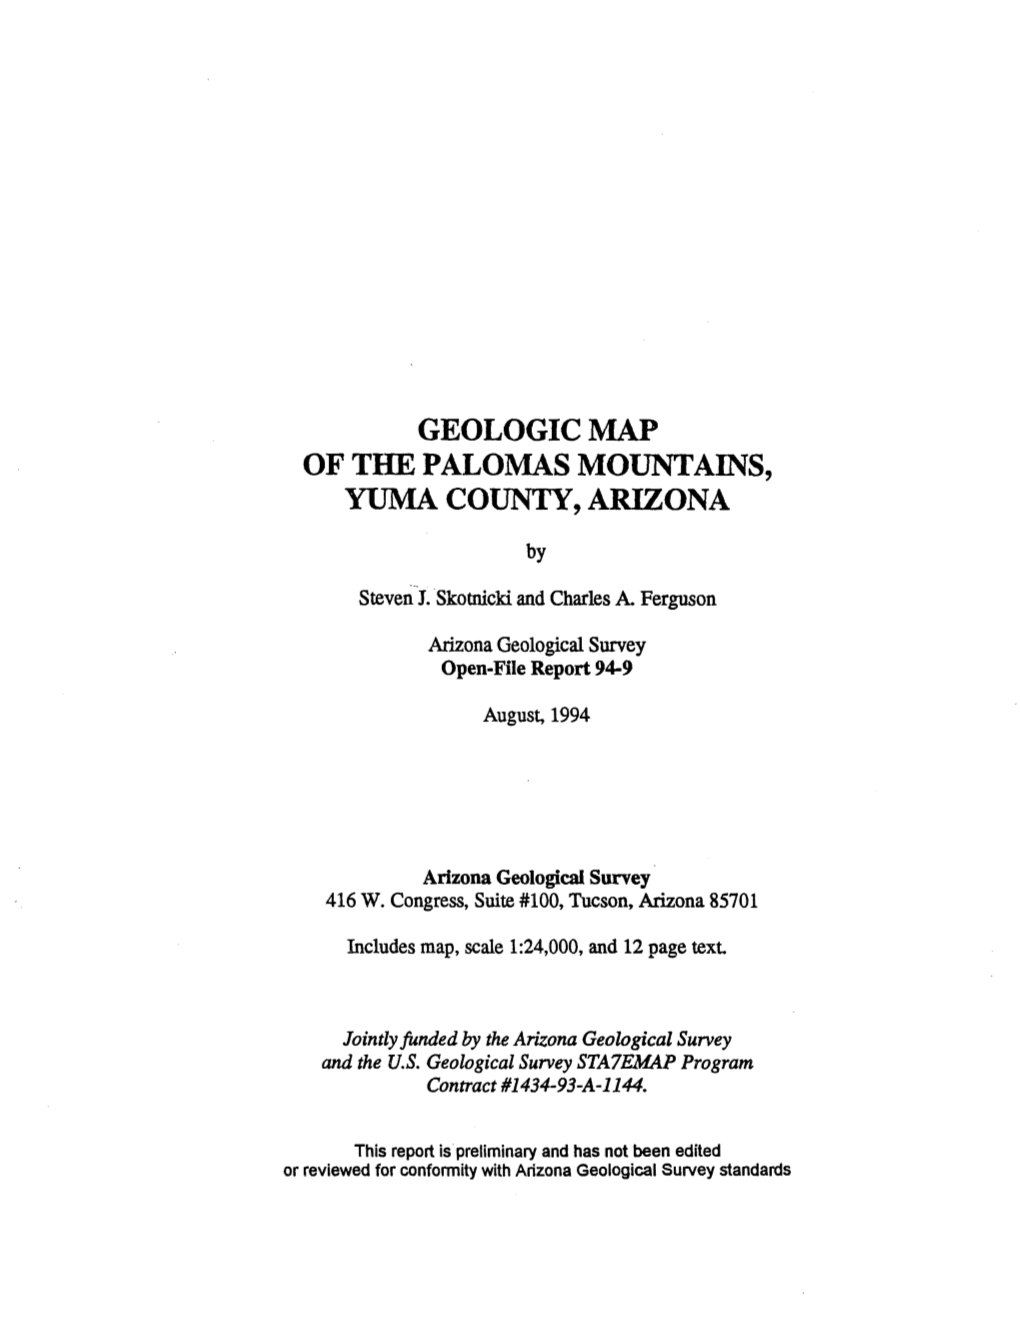 Geologic Map of the Palomas Mountains, Yuma County, Arizona